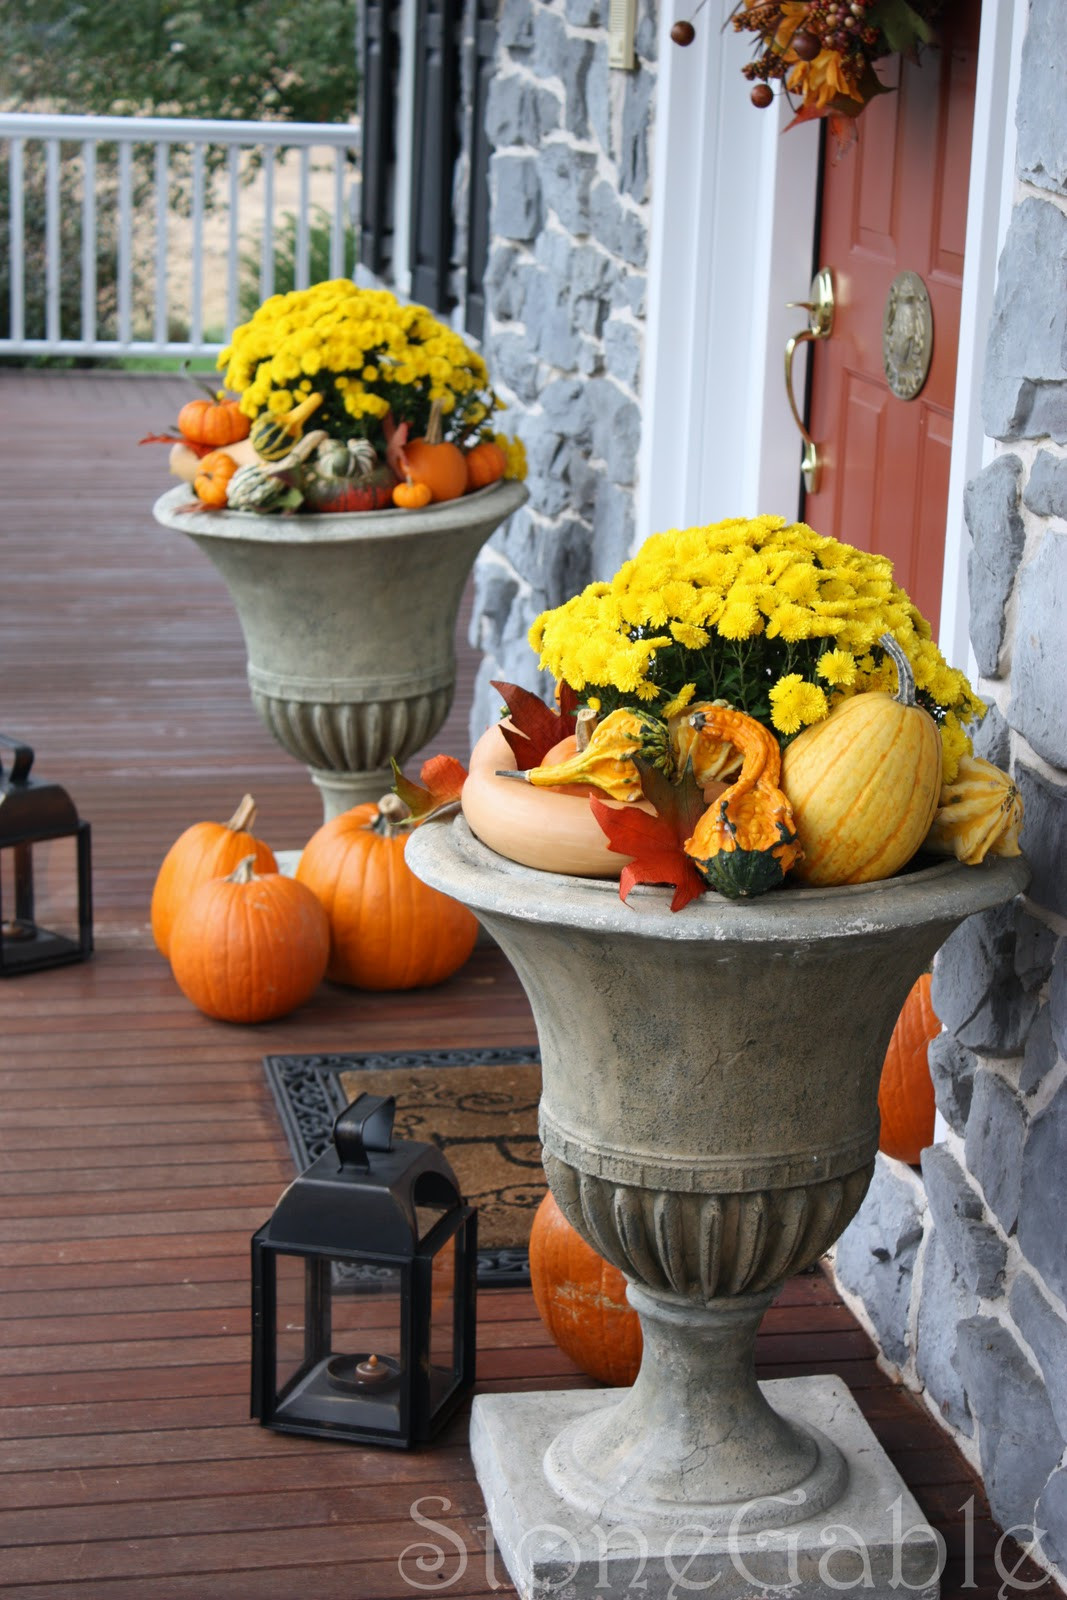 Porch Fall Decorating Ideas
 Outdoor Fall Decor StoneGable